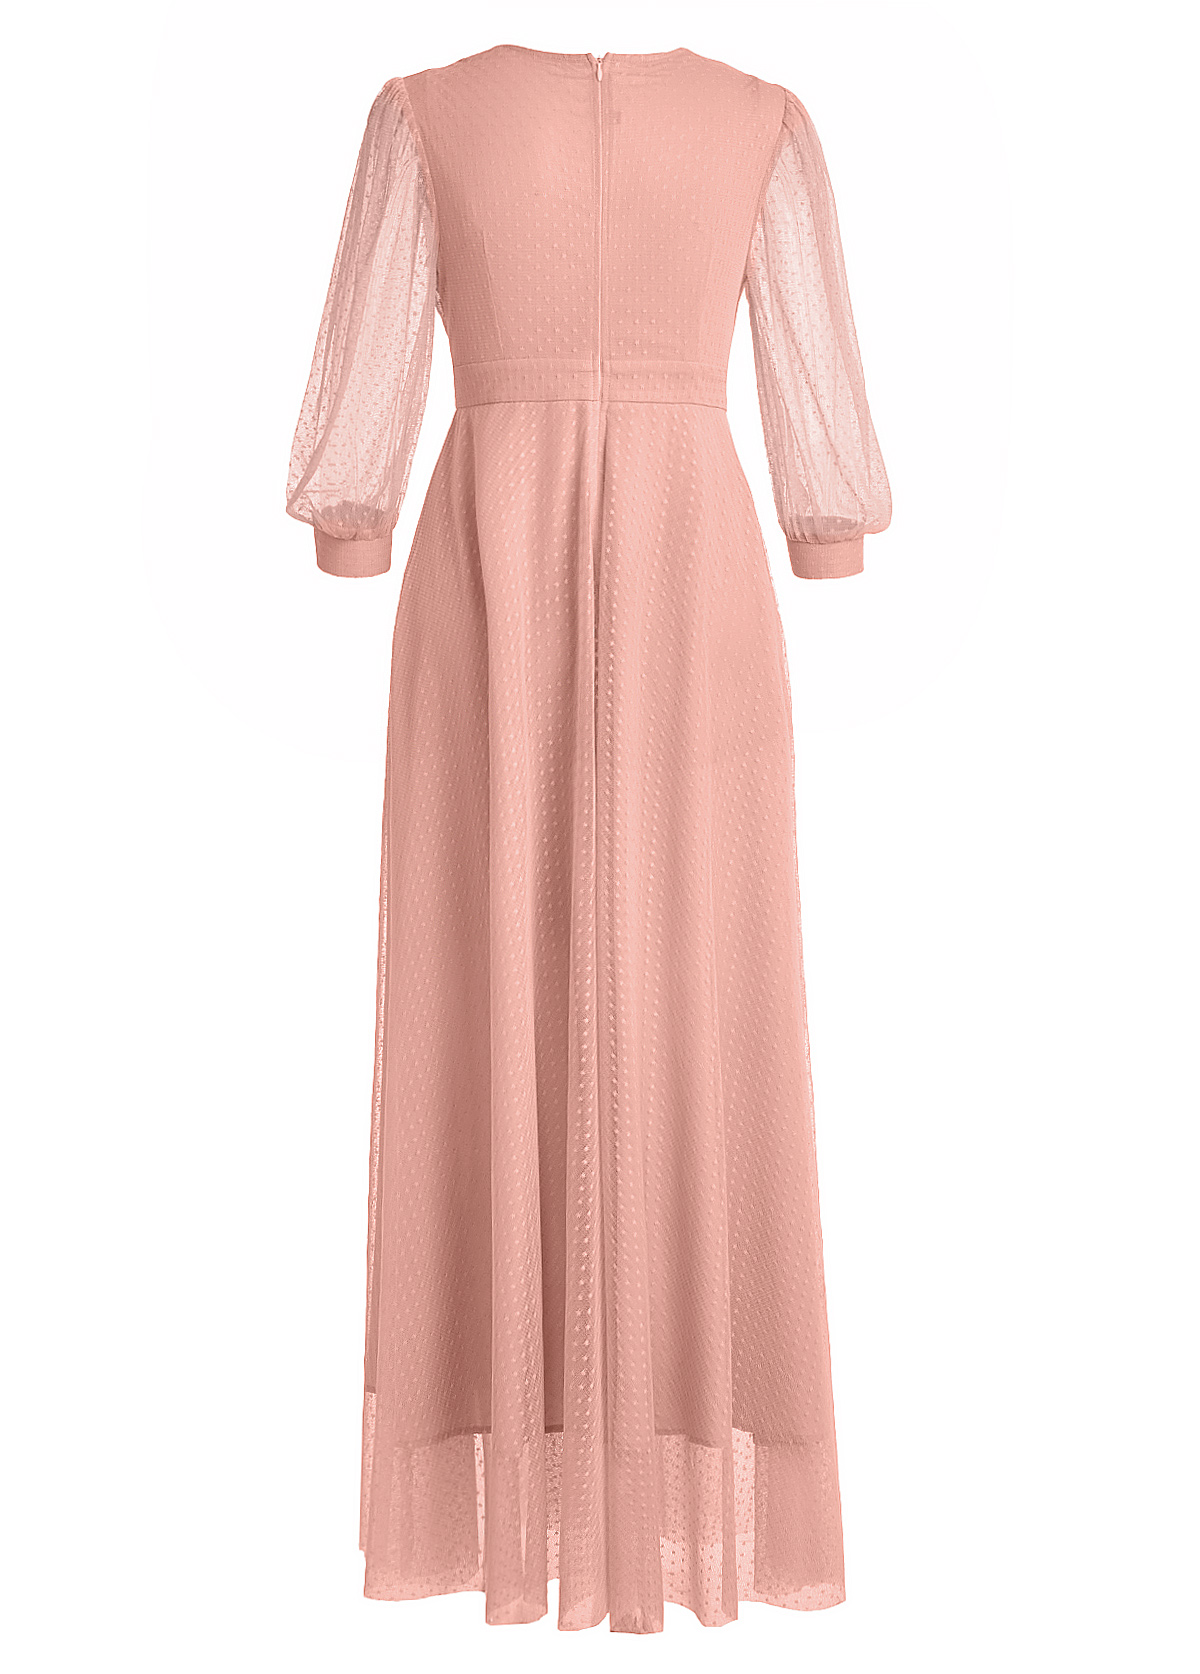 Patchwork Mesh Pink Three Quarter Length Sleeve Dress